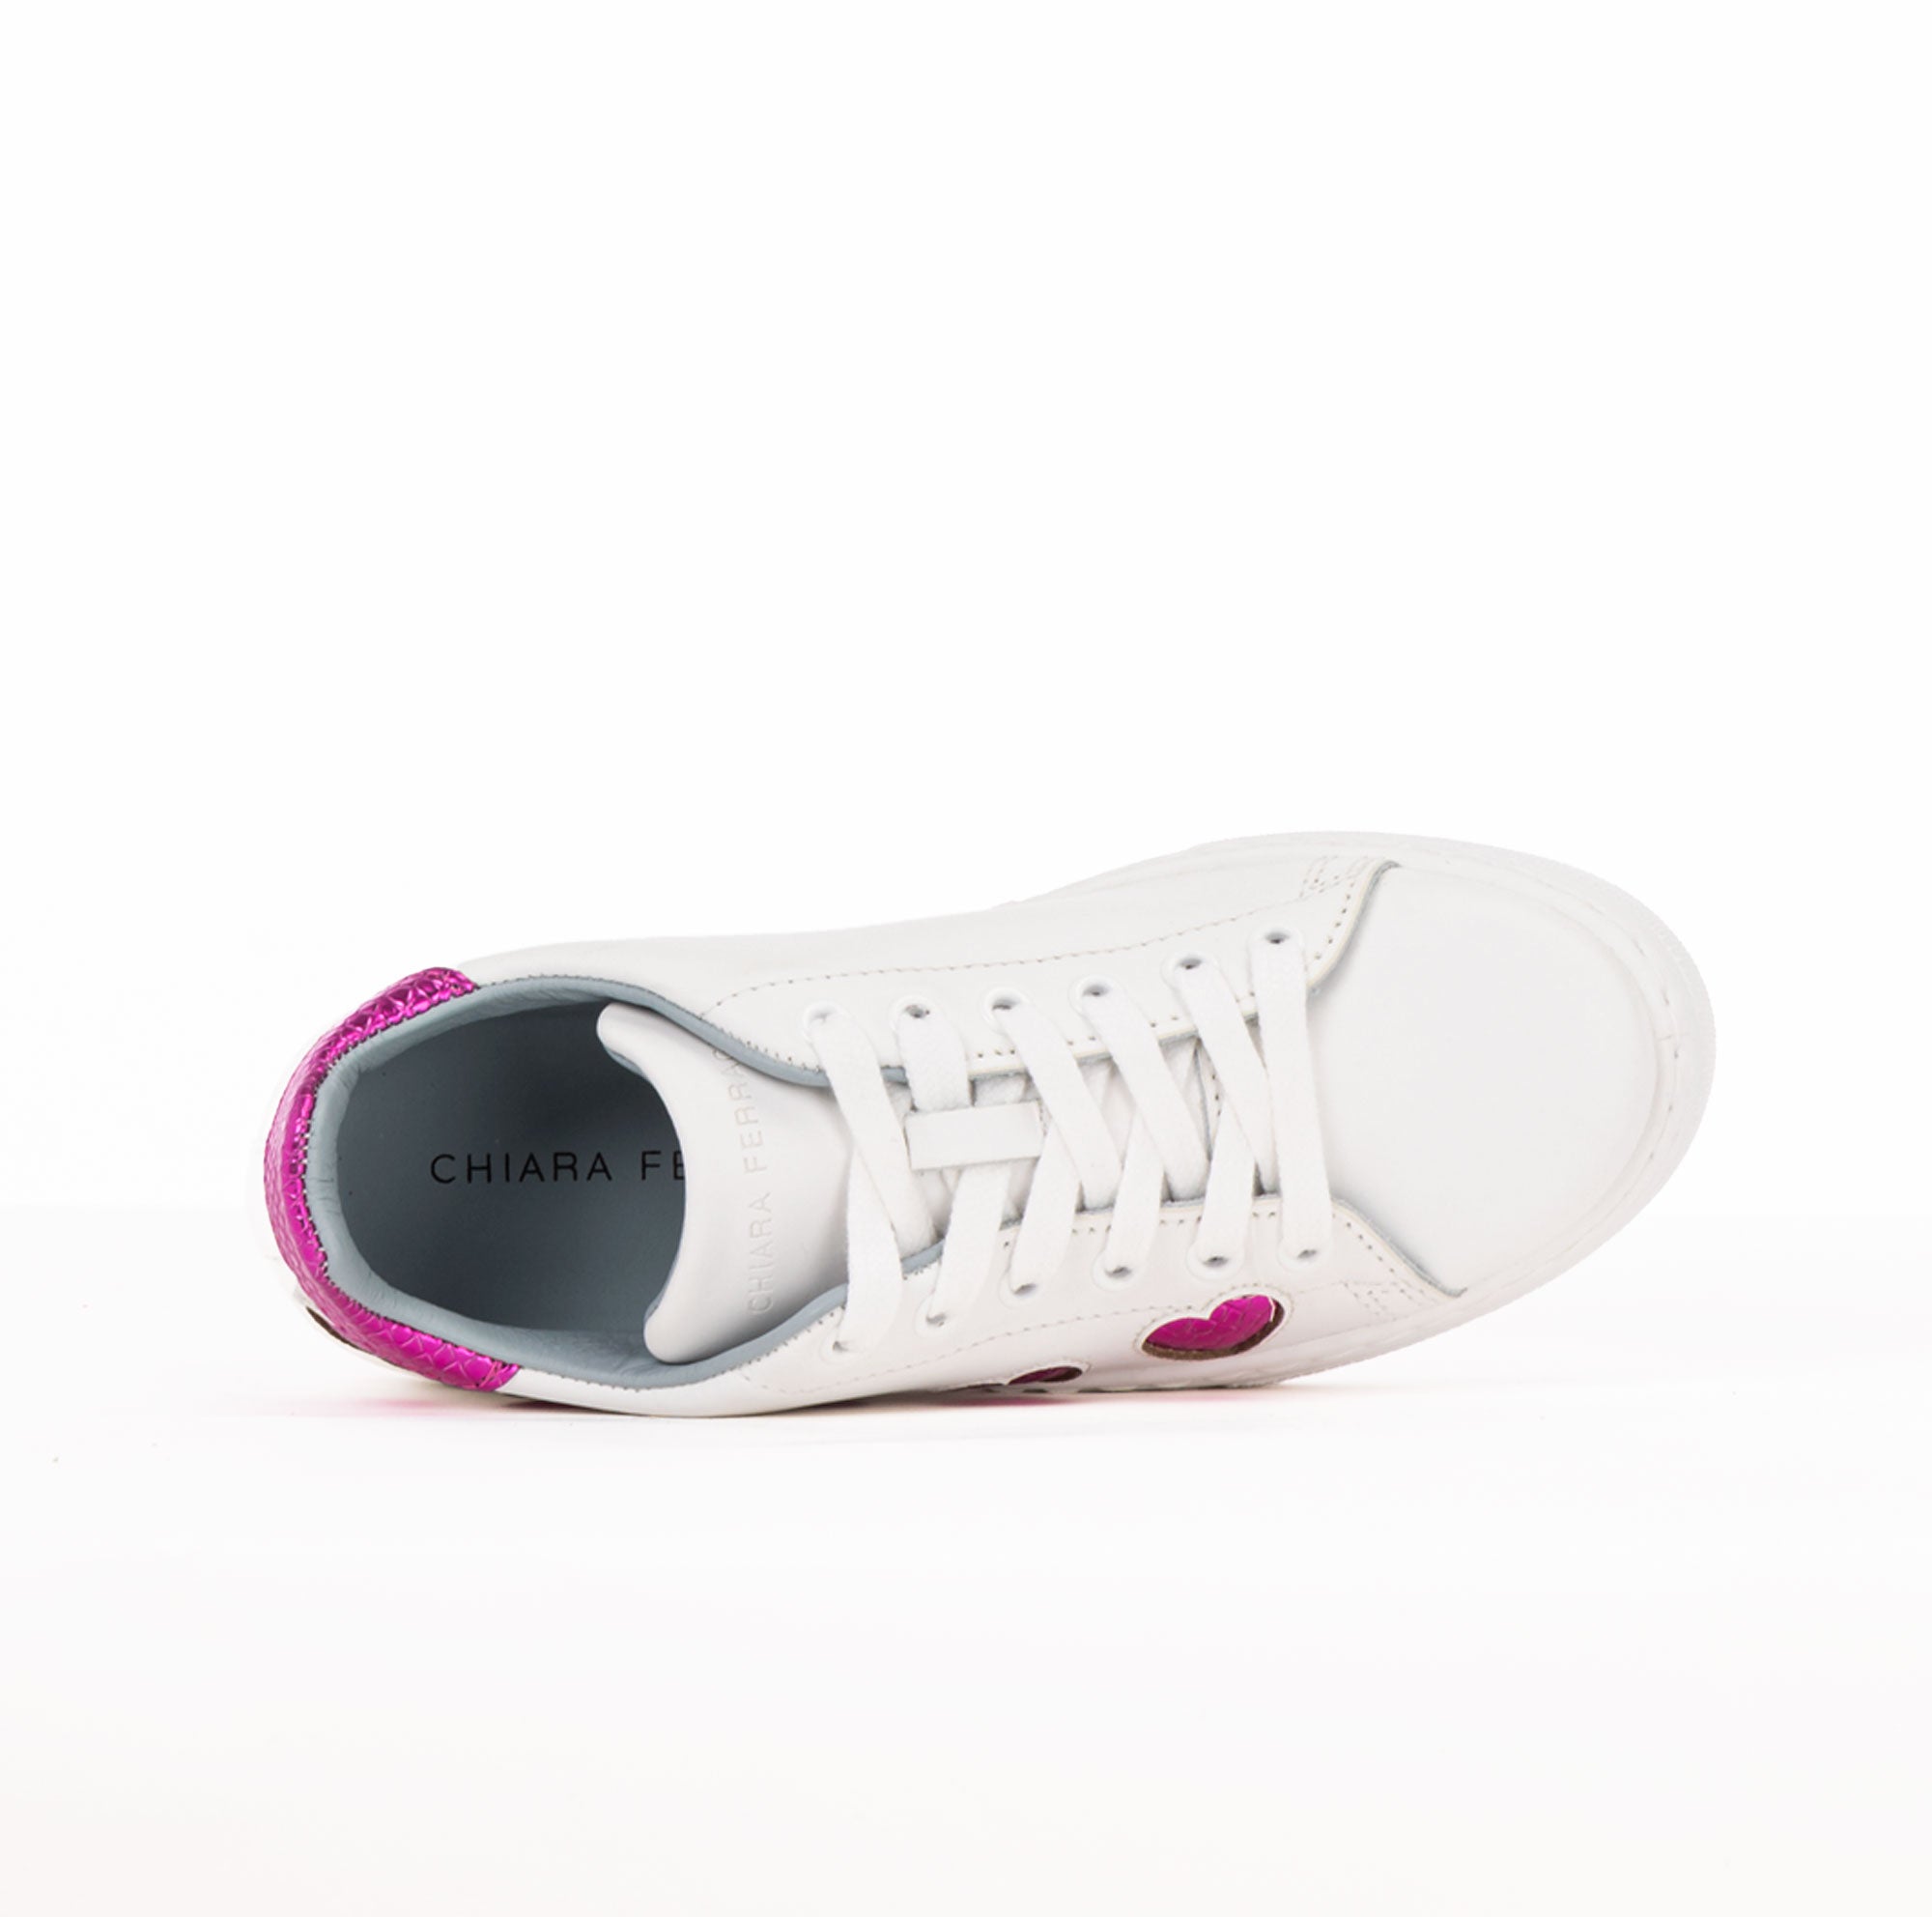 CHIARA FERRAGNI | Sneakers Bambina | CFB031-011